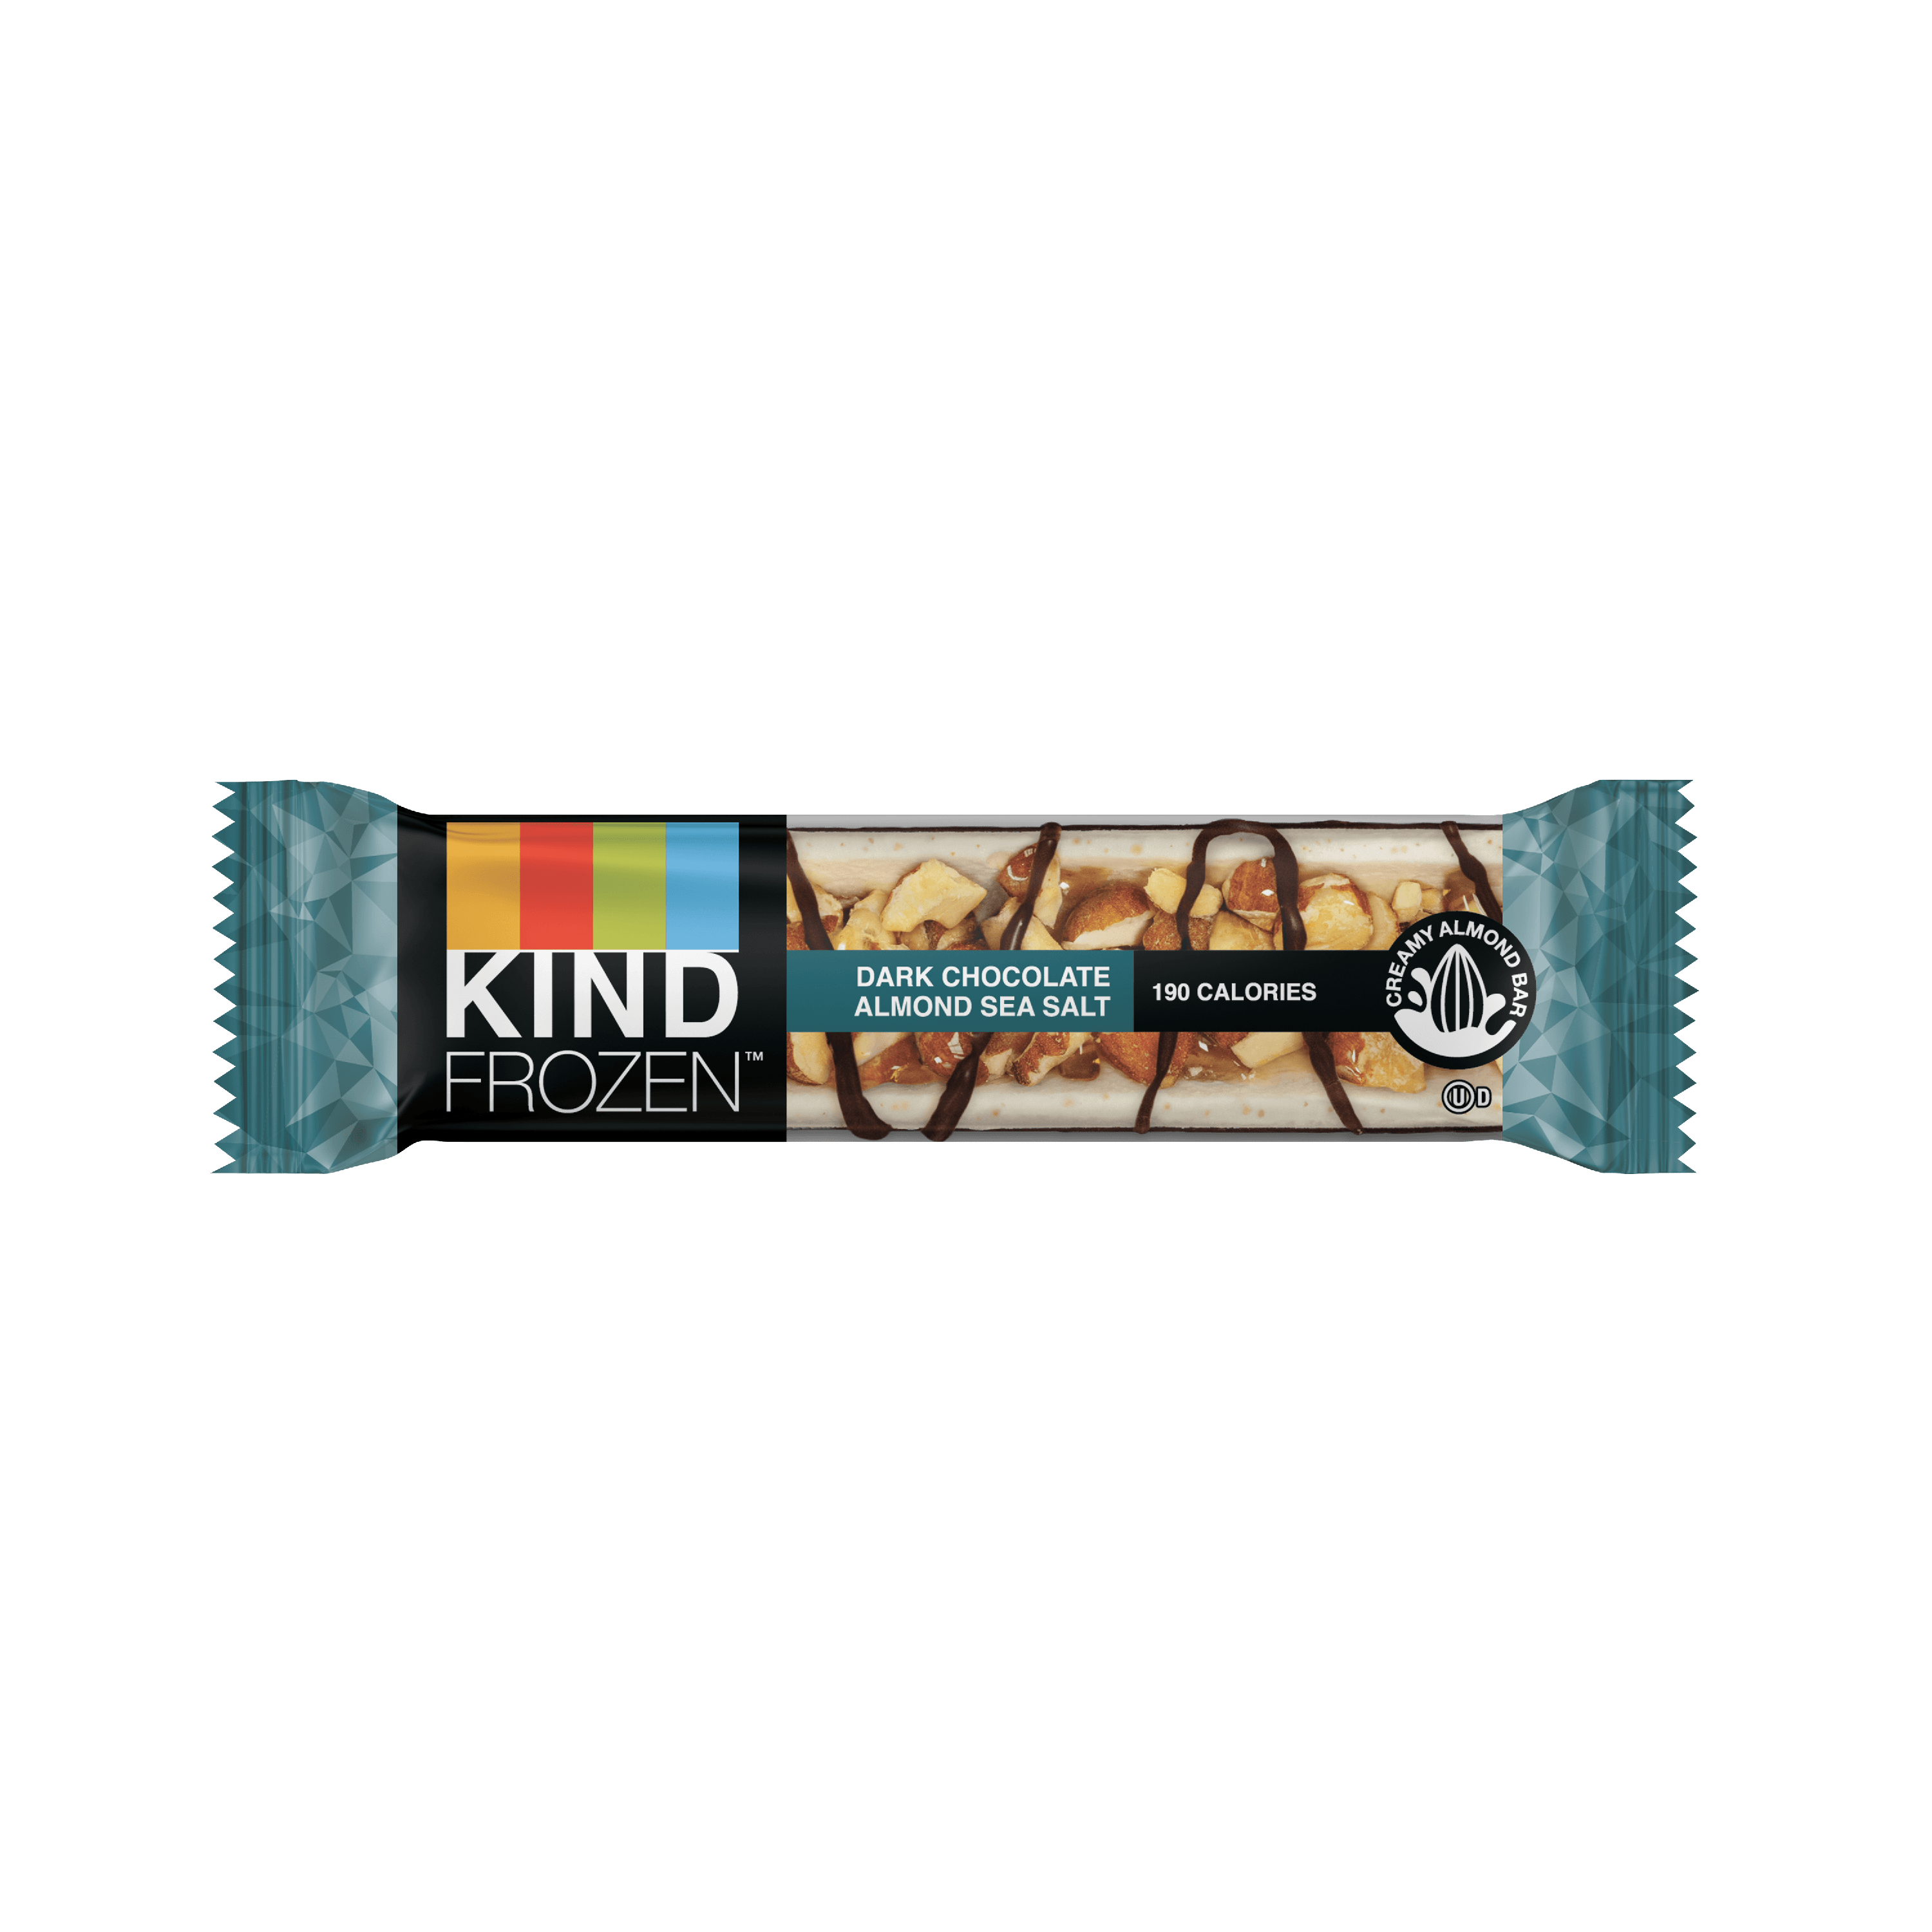 KIND FROZEN Dark Chocolate Almond Sea Salt Bars 6 Count Box - image 2 of 5